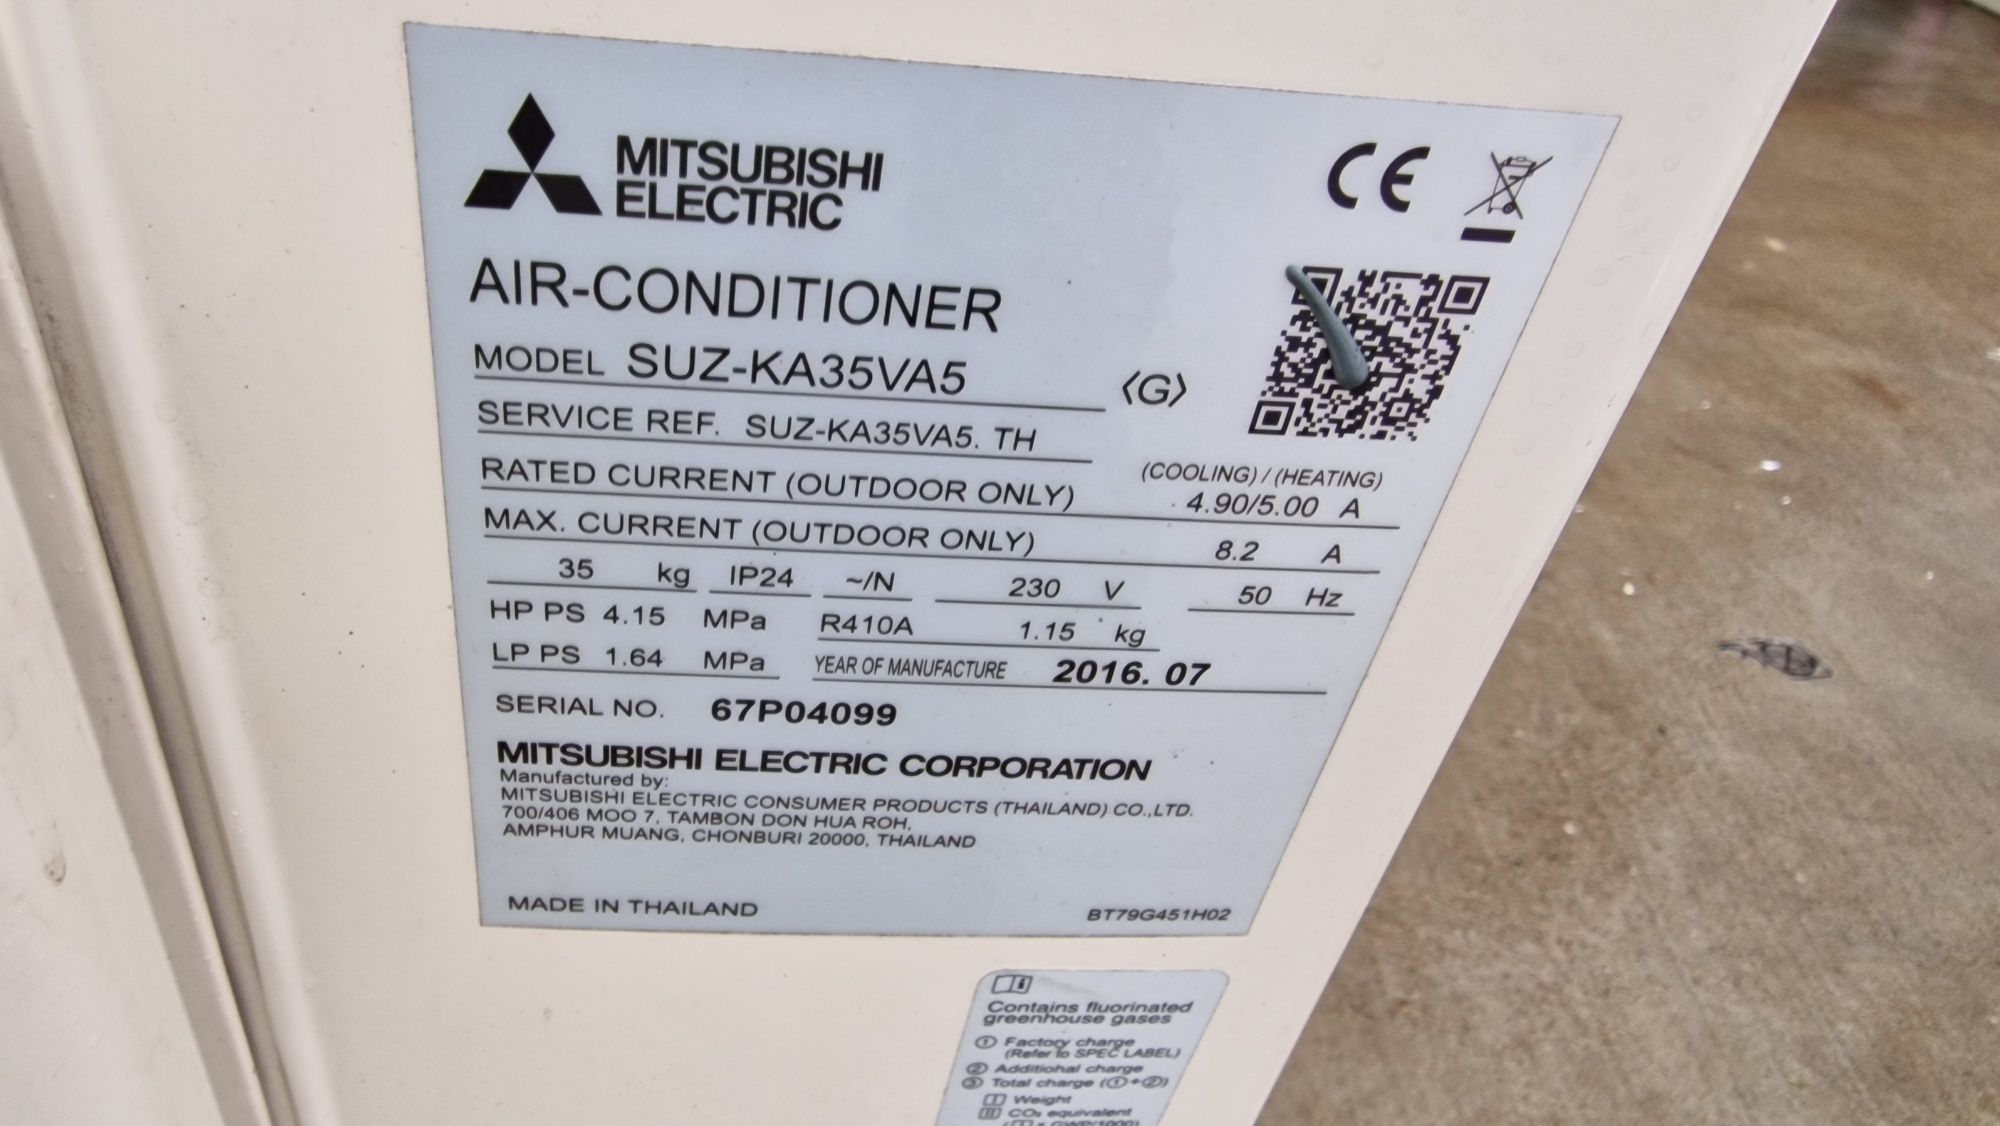 Касетъчни климатици mitsubishi electric  SUZ-KA25  35  50  60  71